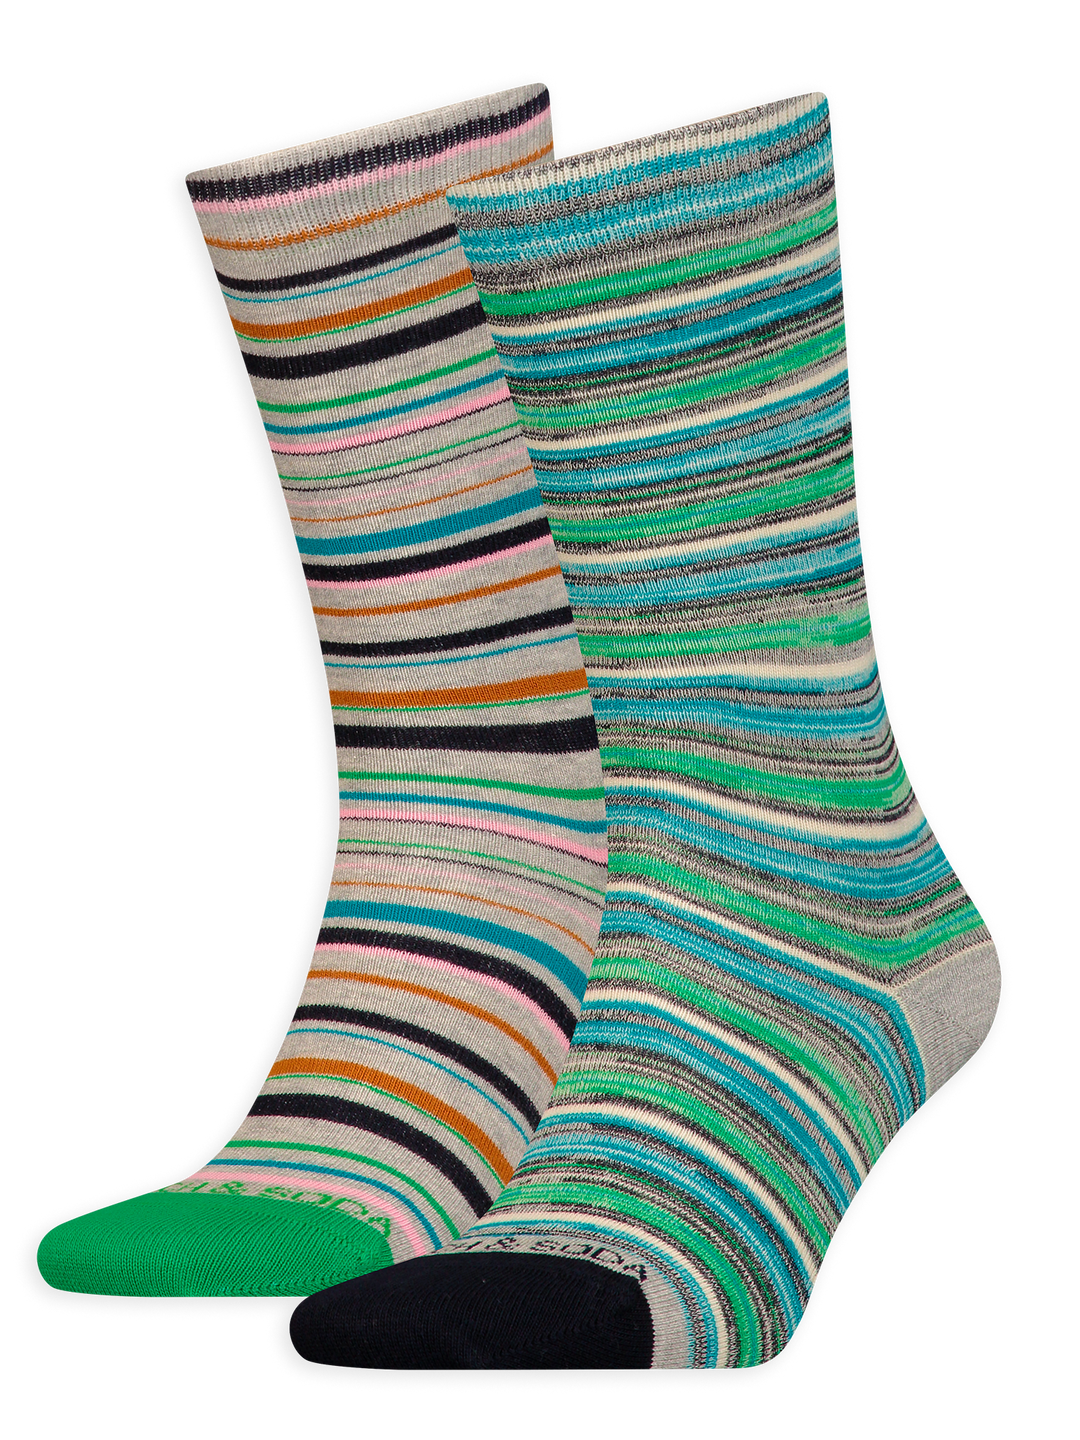 Stripe on Stripe Socks 2 Pack in Green Grey | Buster McGee